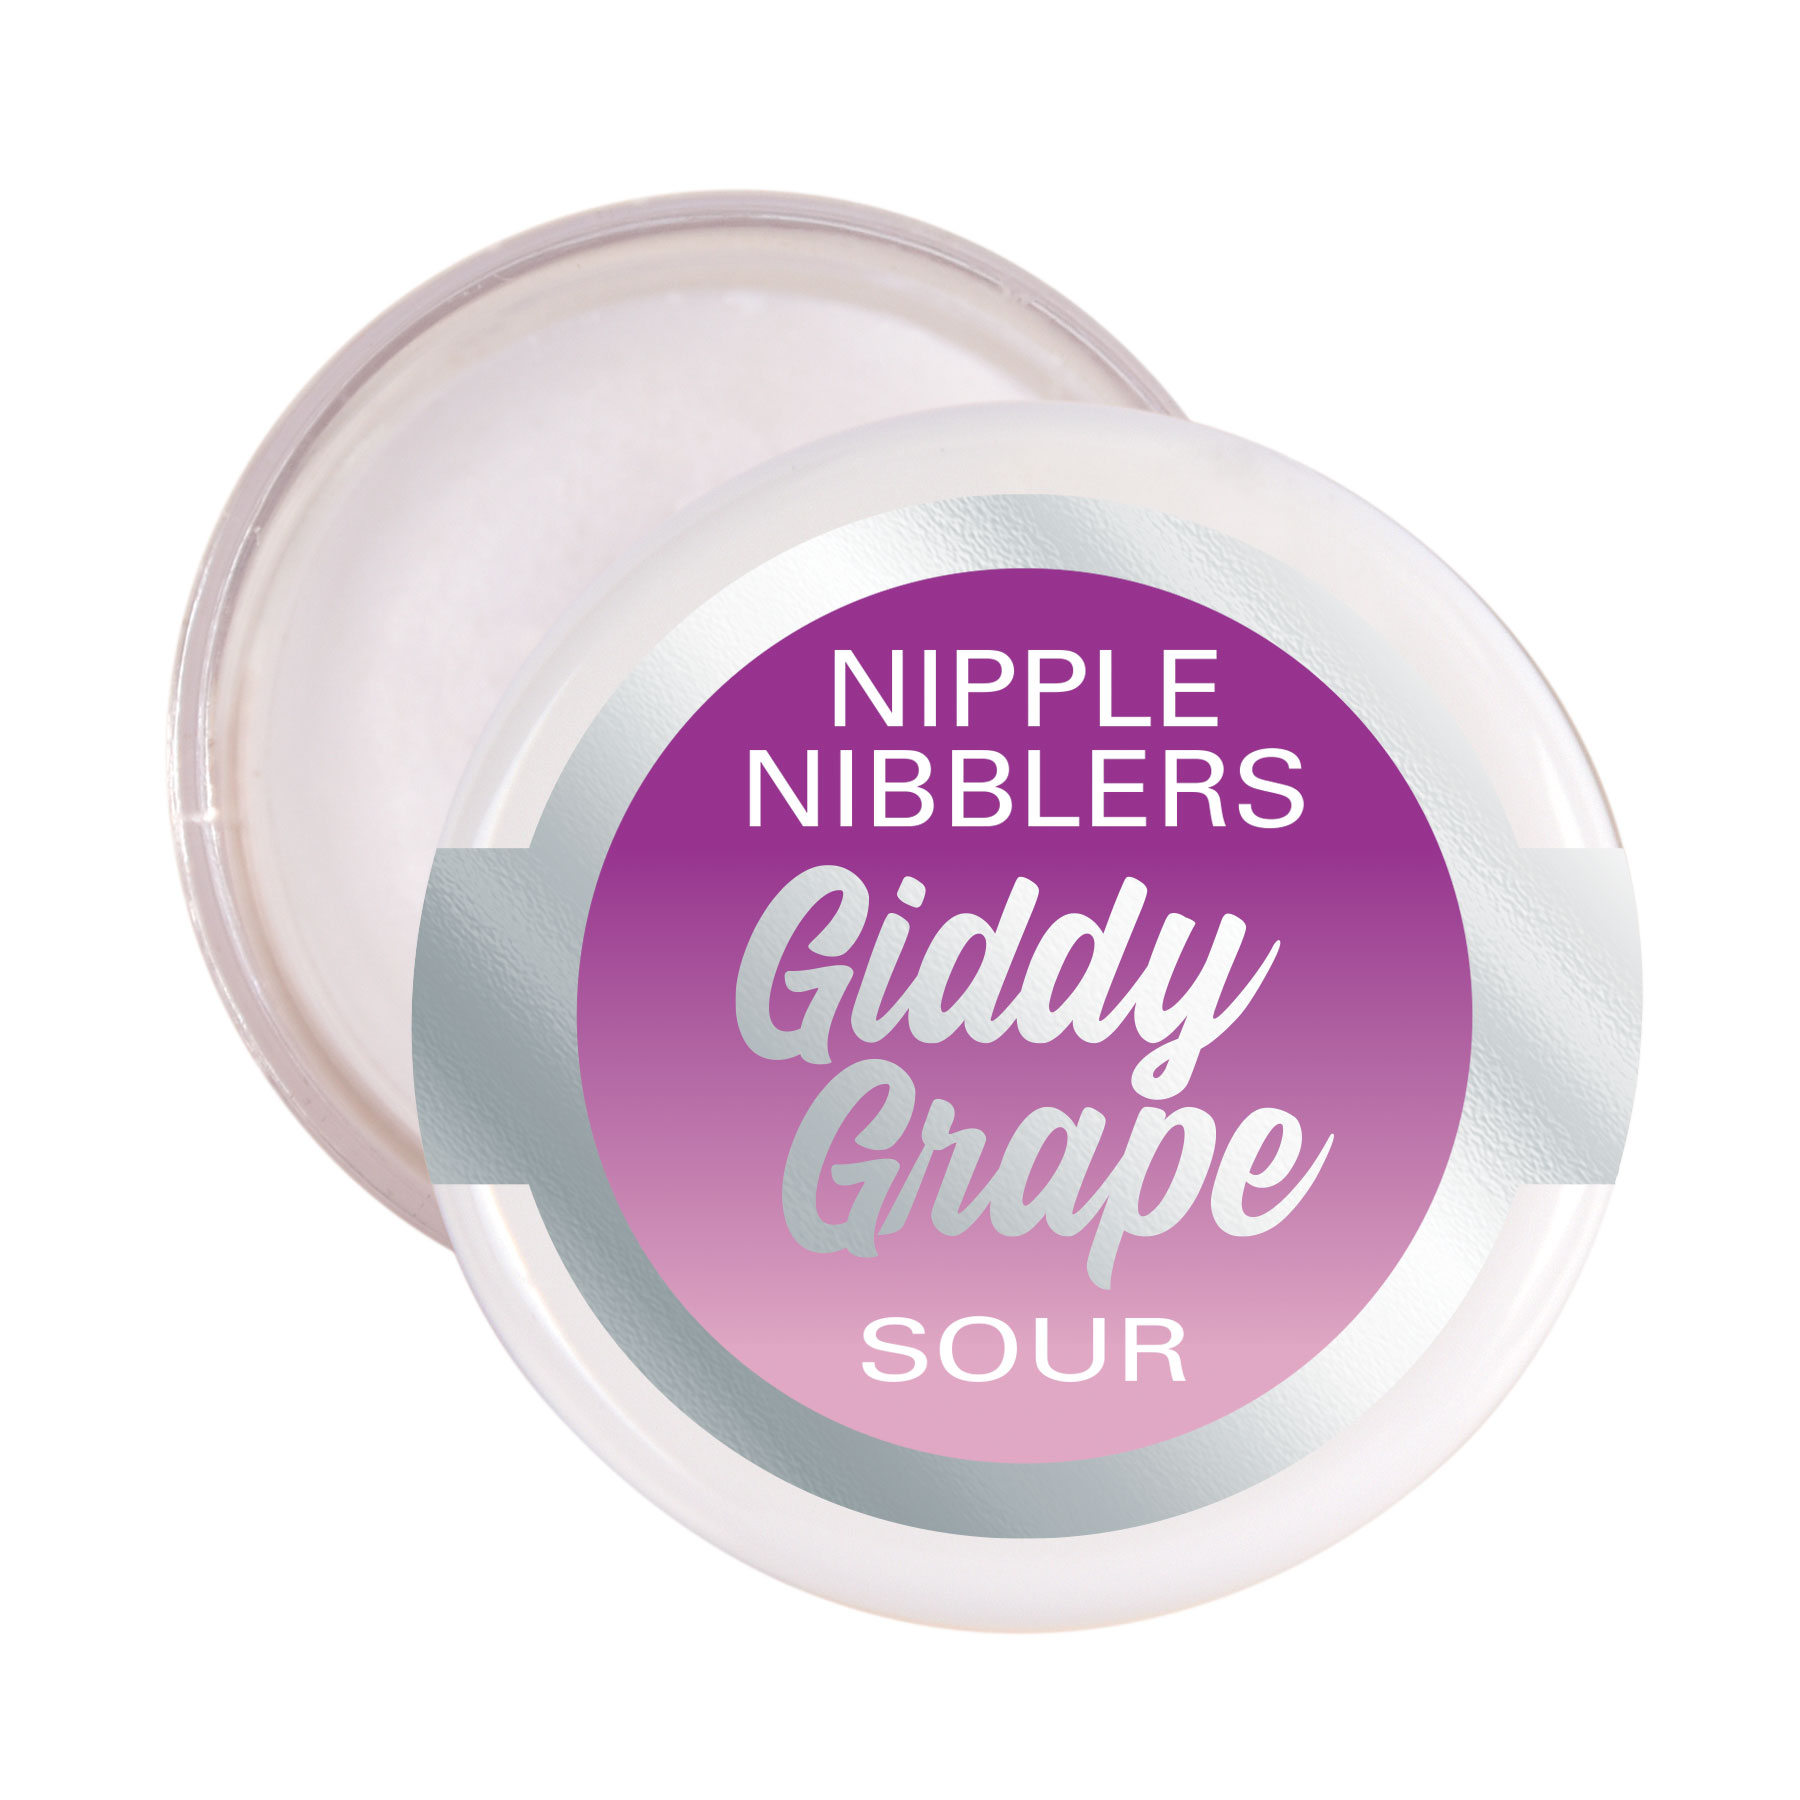 nipple nibbler sour pleasure balm giddy grape g jar 